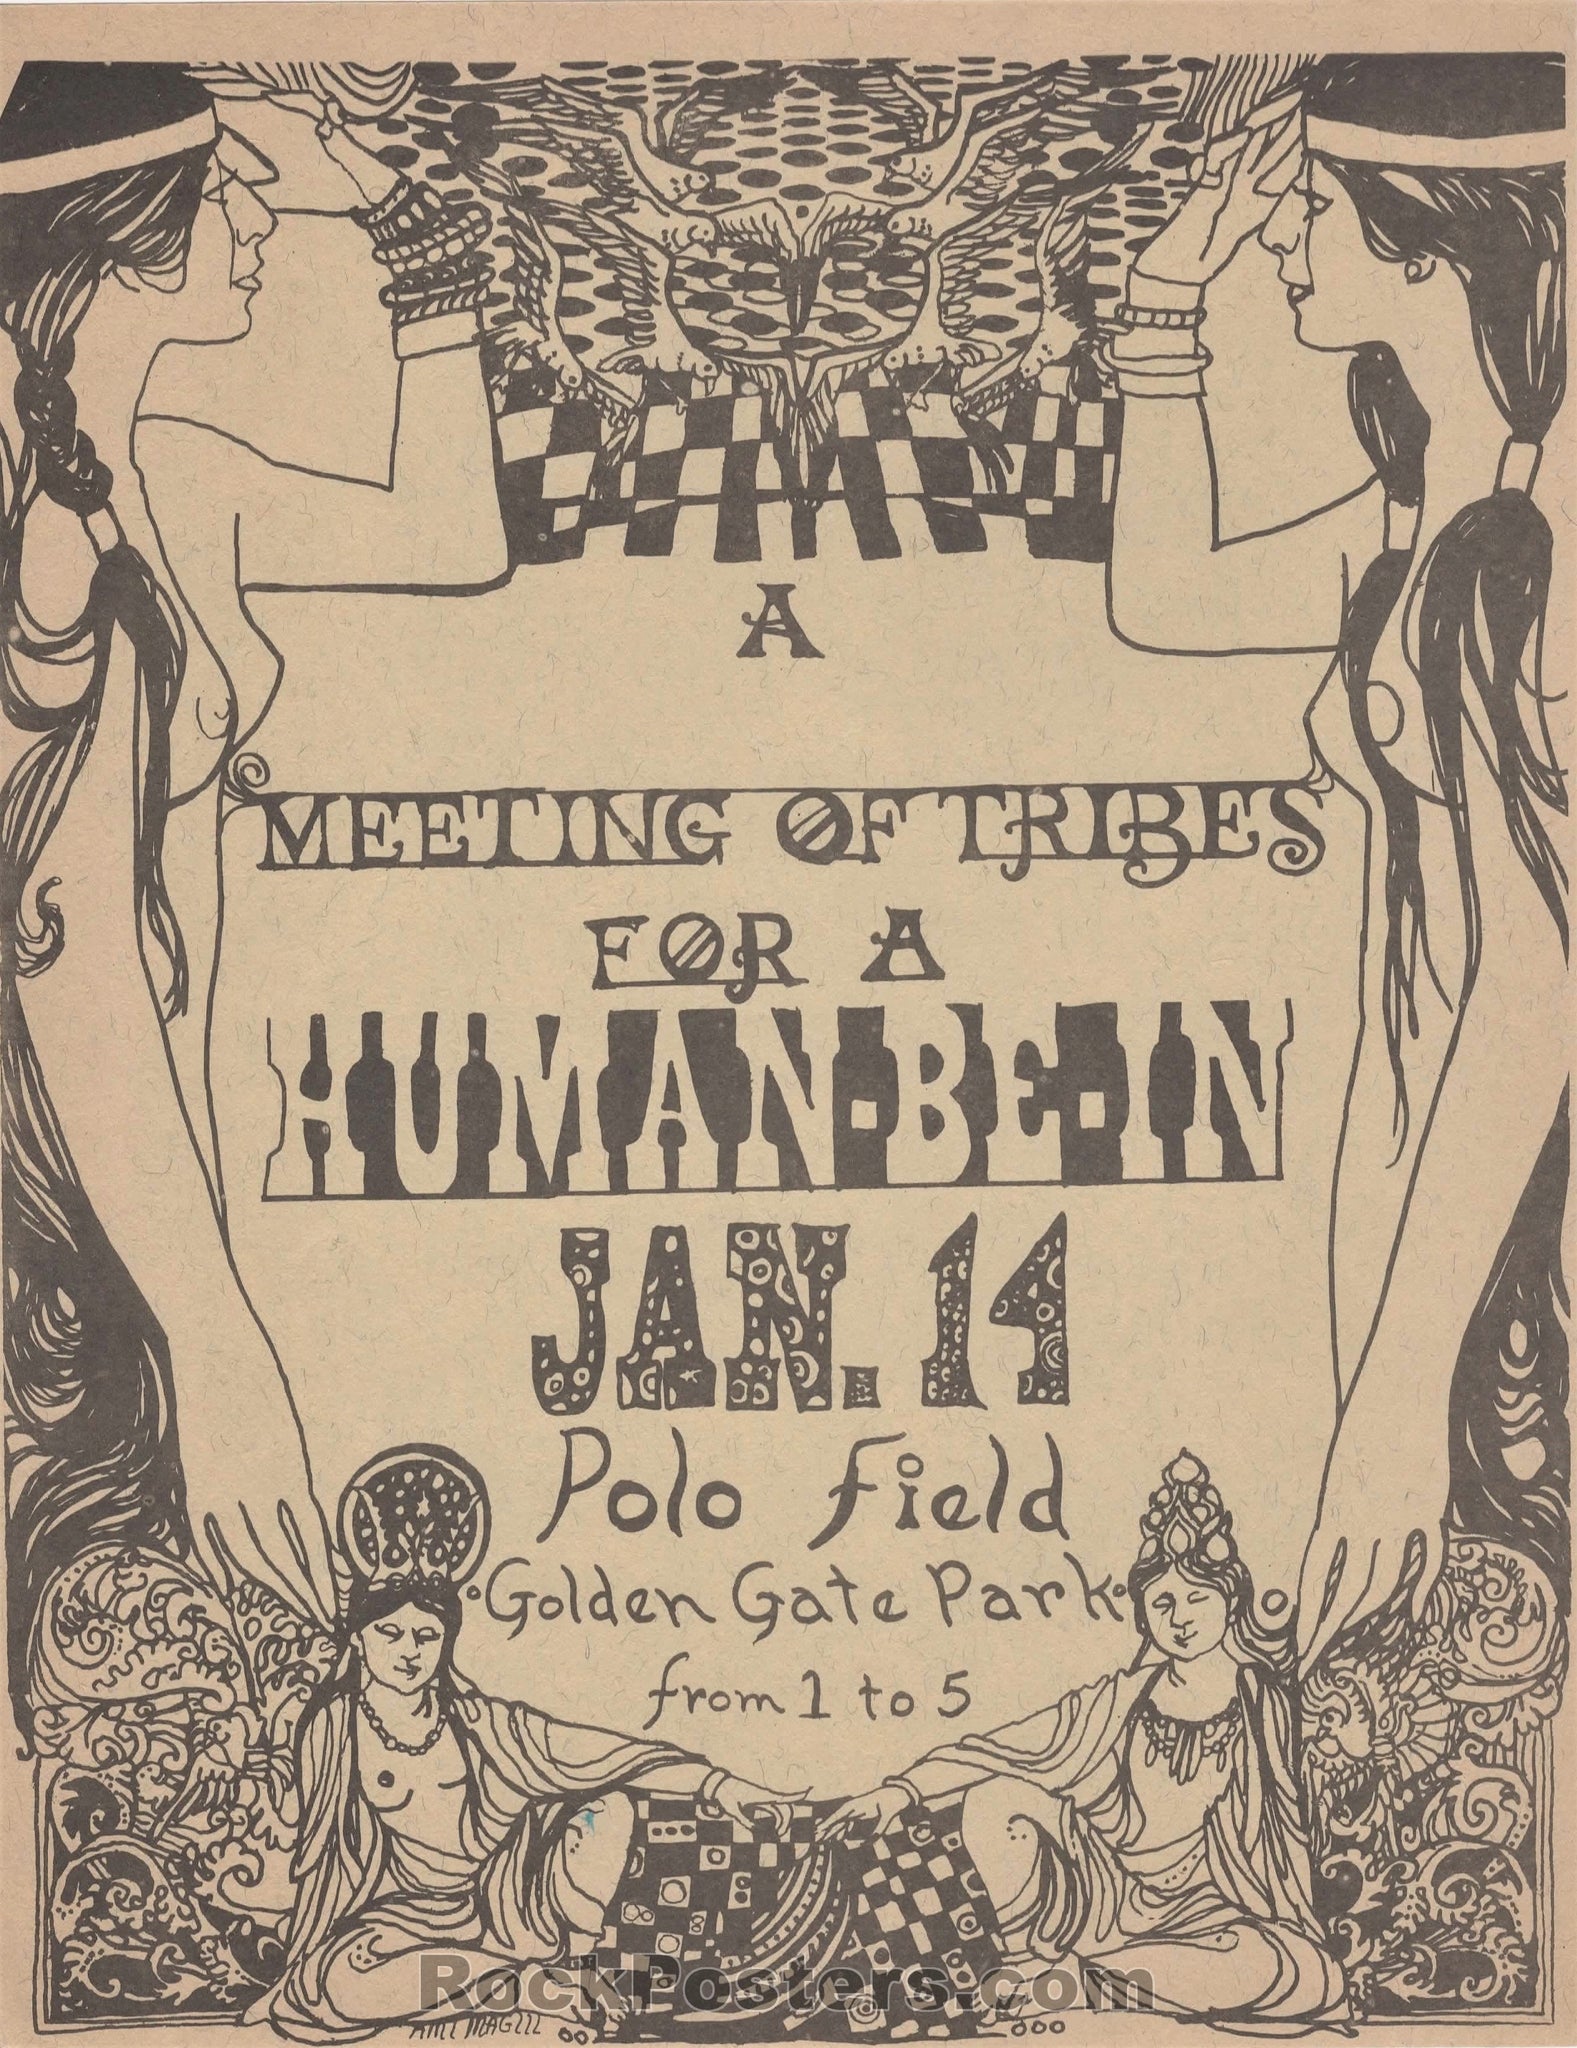 AUCTION - Human Be-In - Grateful Dead Timothy Leary - 1966 Handbill - Golden Gate Park - Near Mint